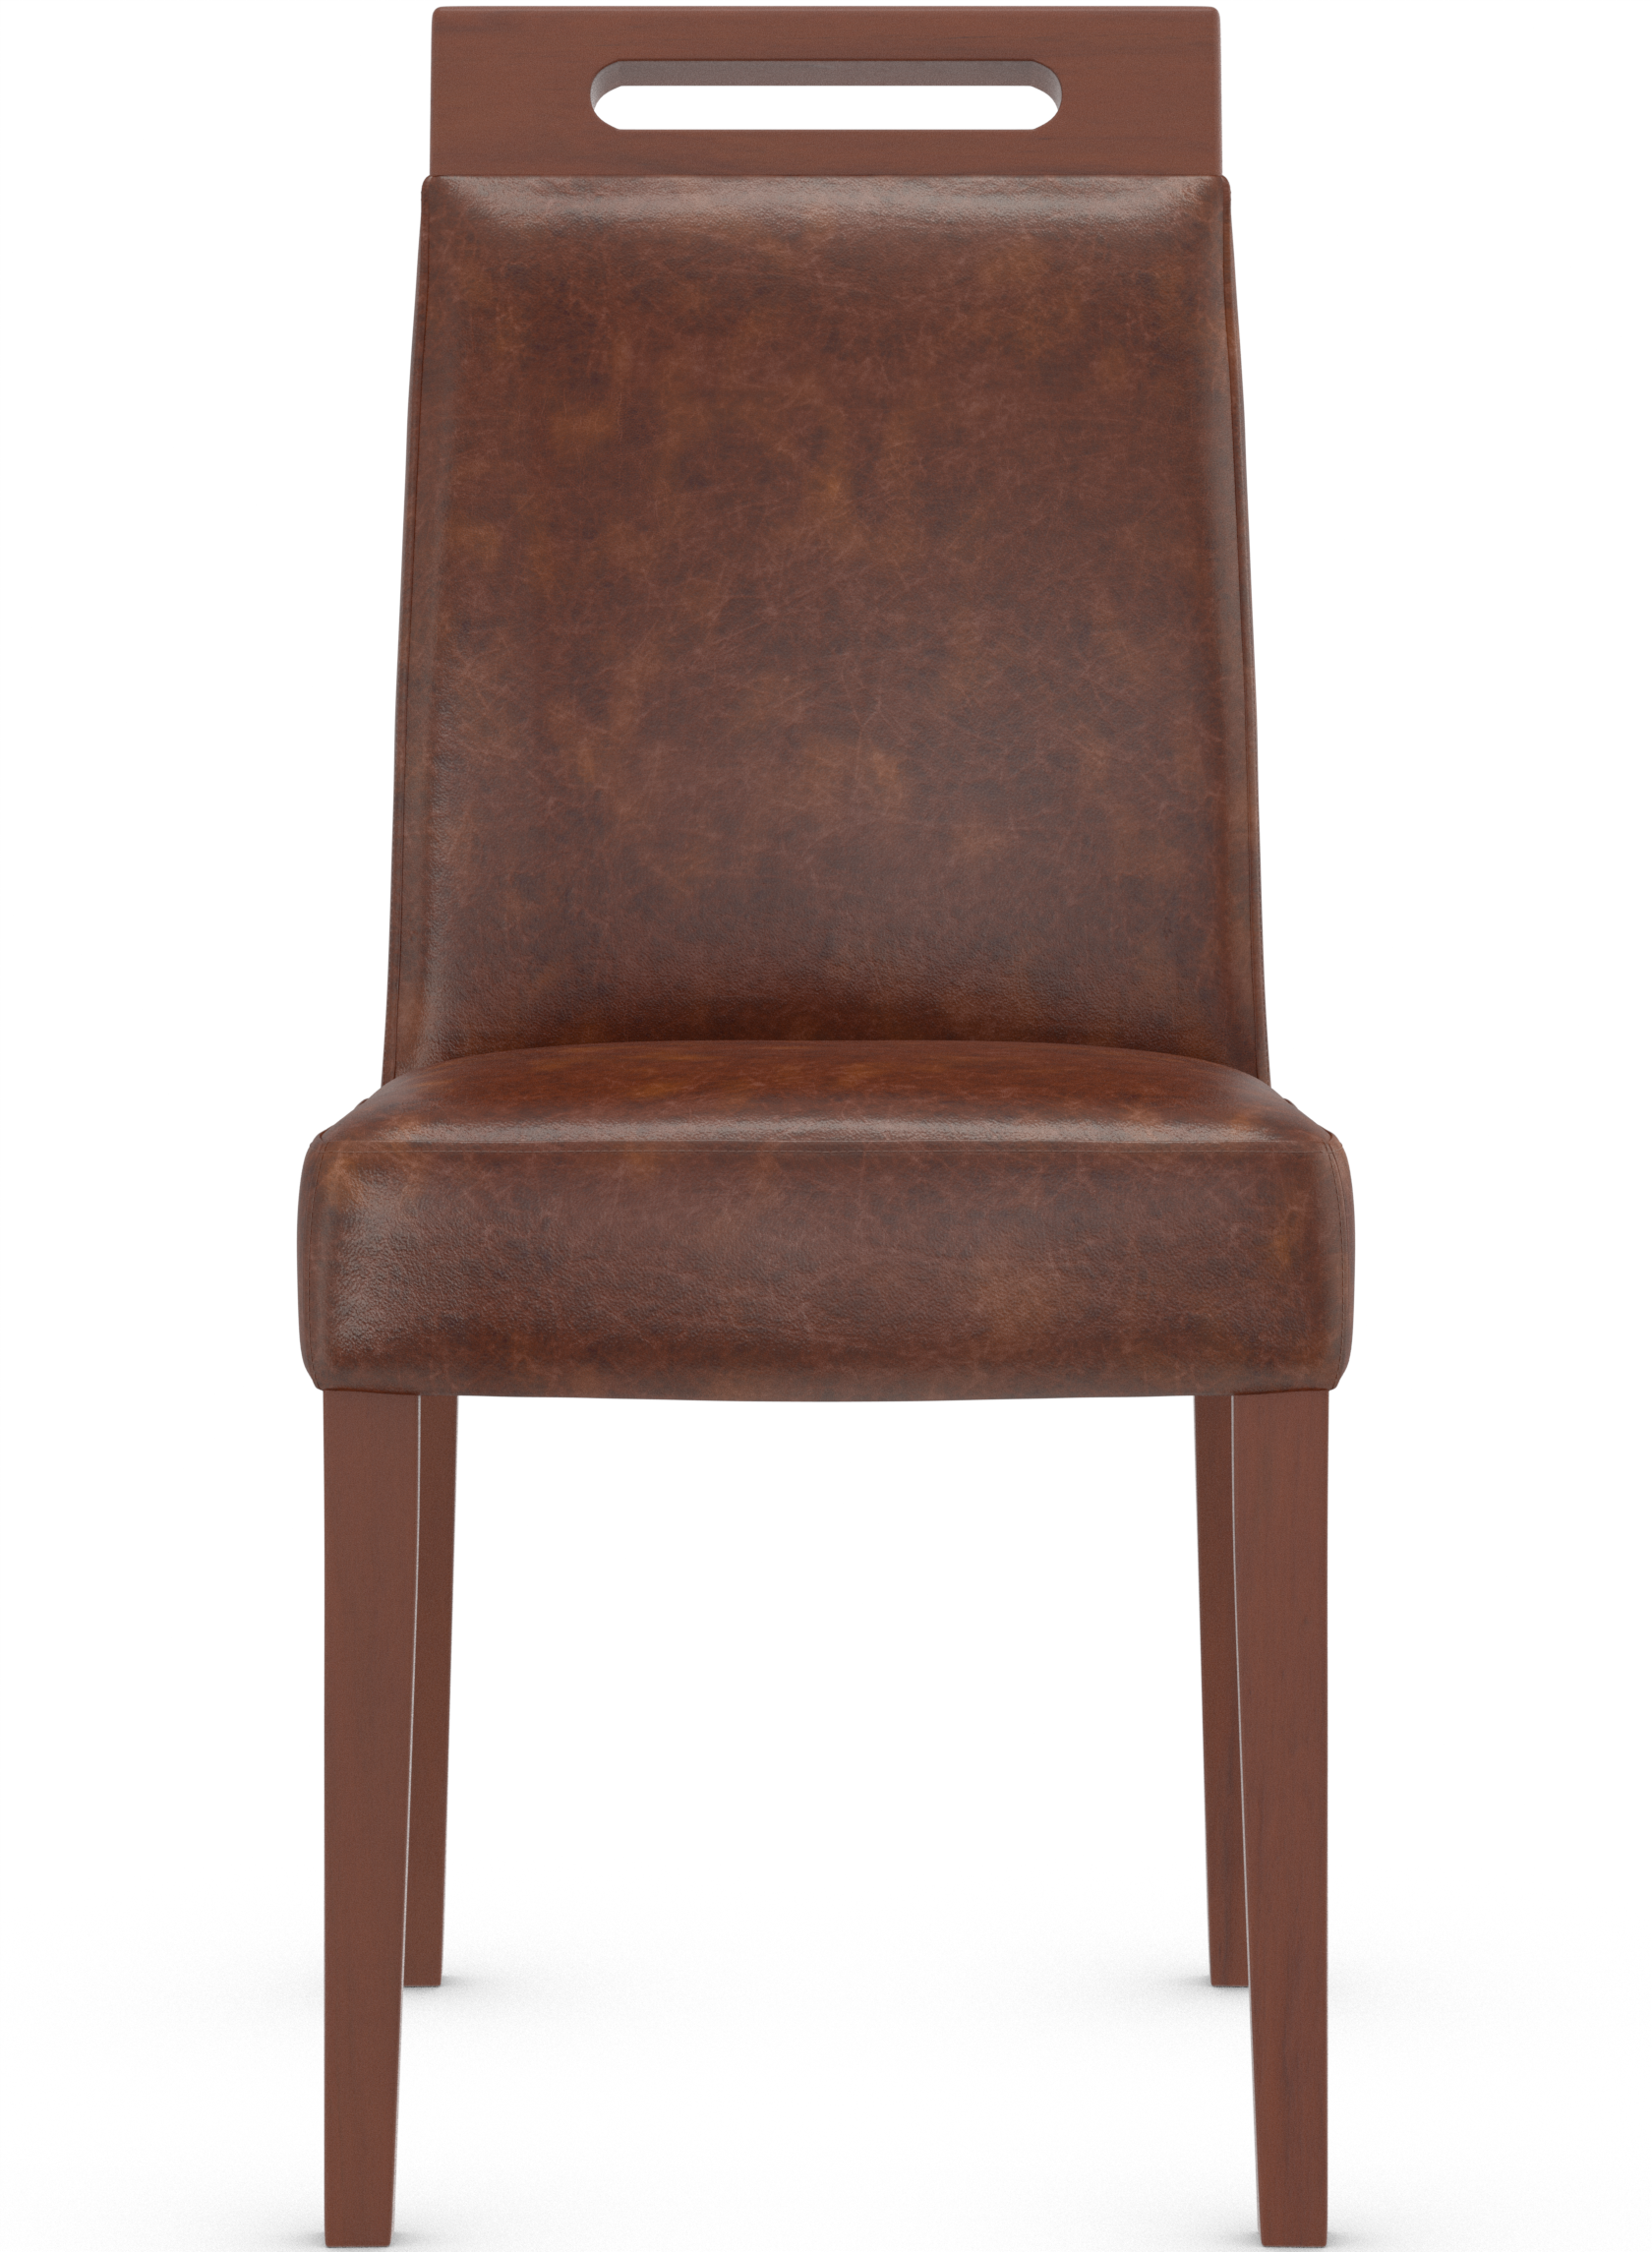 Modena Matt Black Dining Chair Aniline Leather